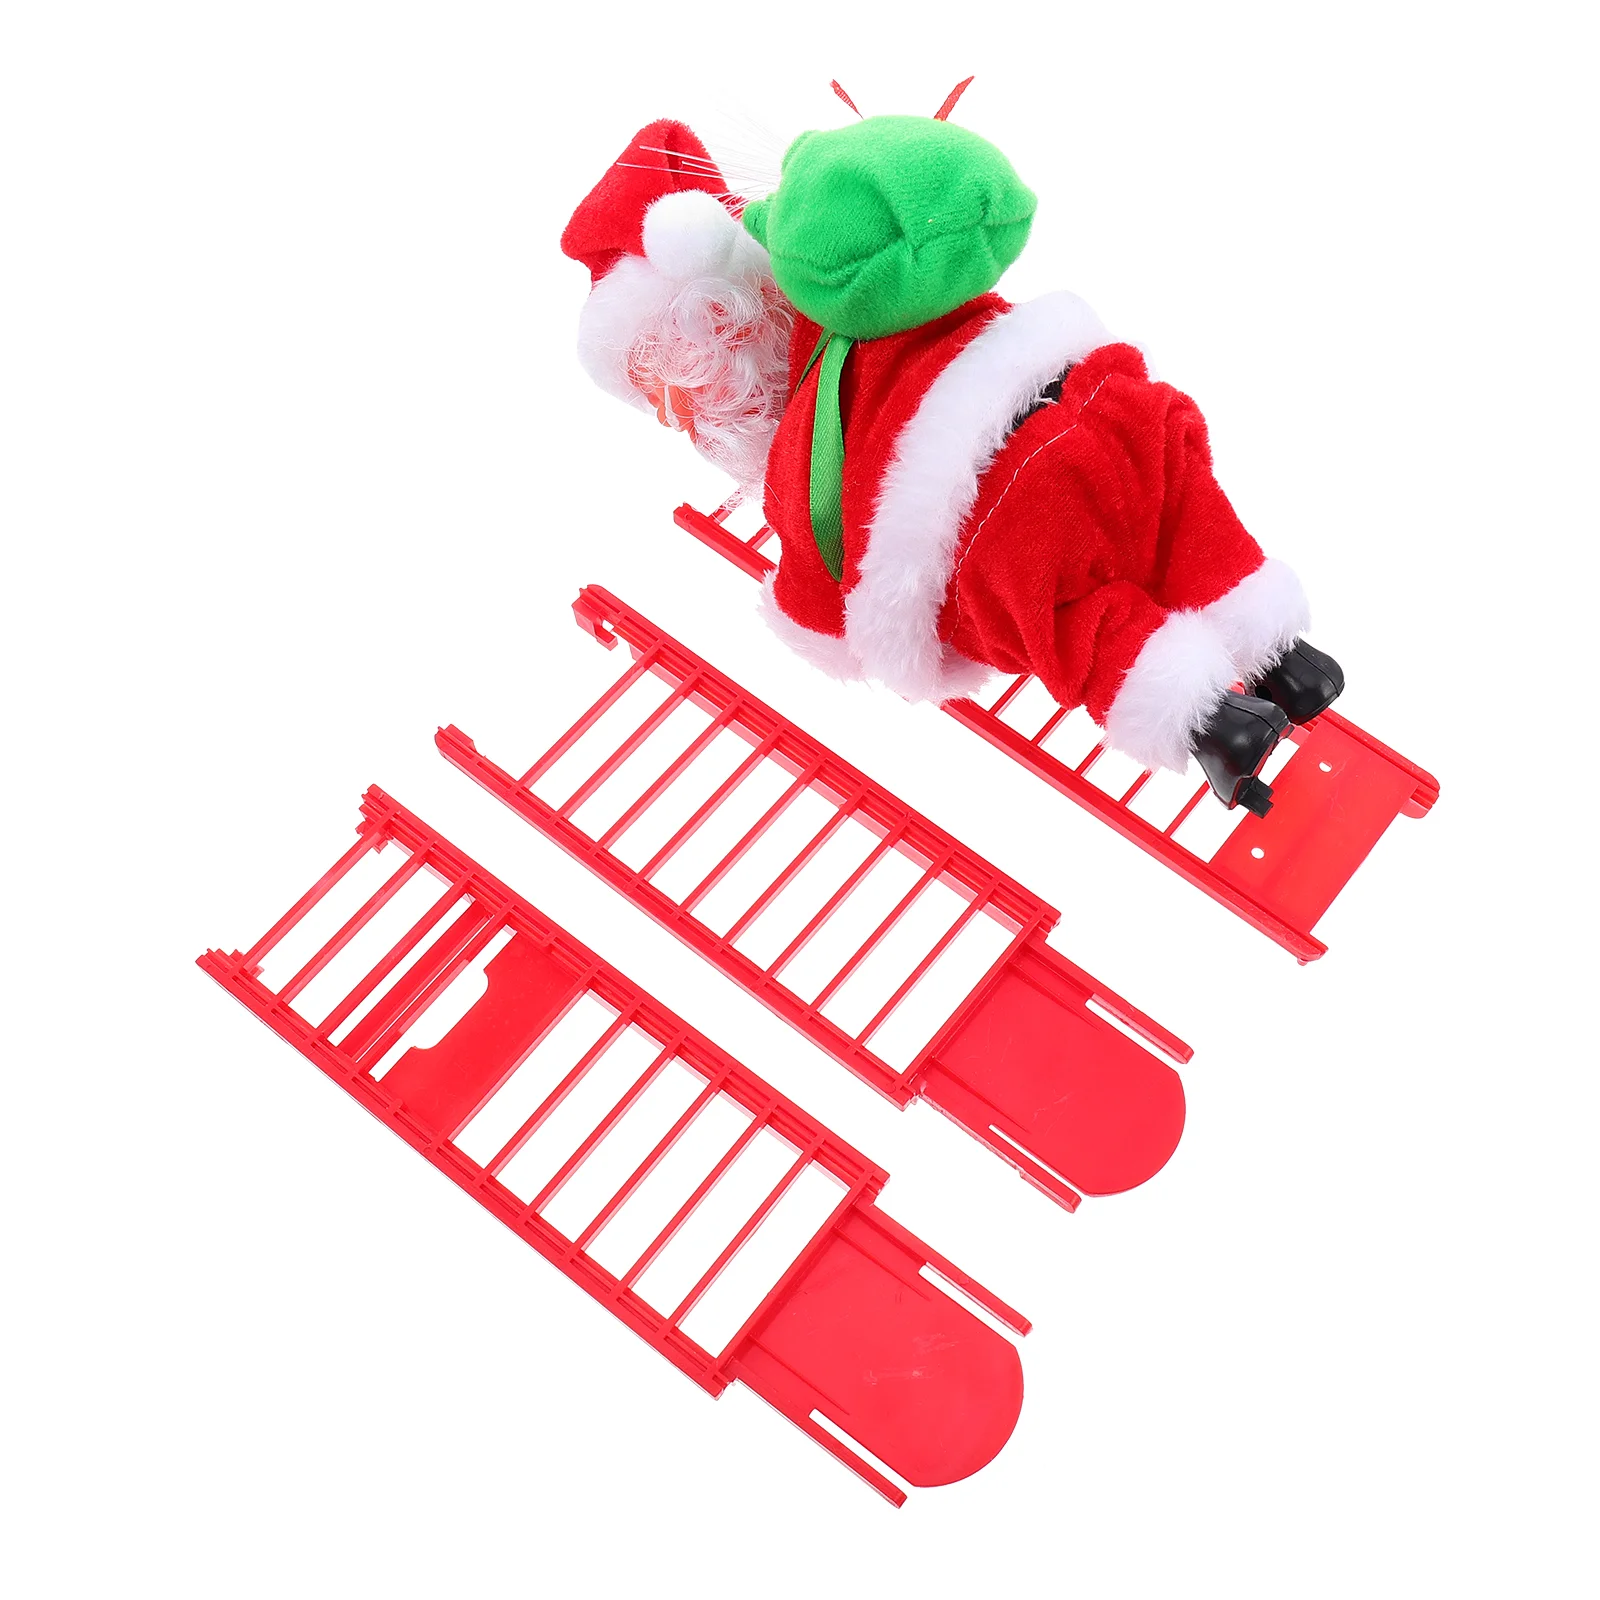 

Ladder Santa Claus Christmas Adornment Party Decor The Tree Kids Toy Children Xmas